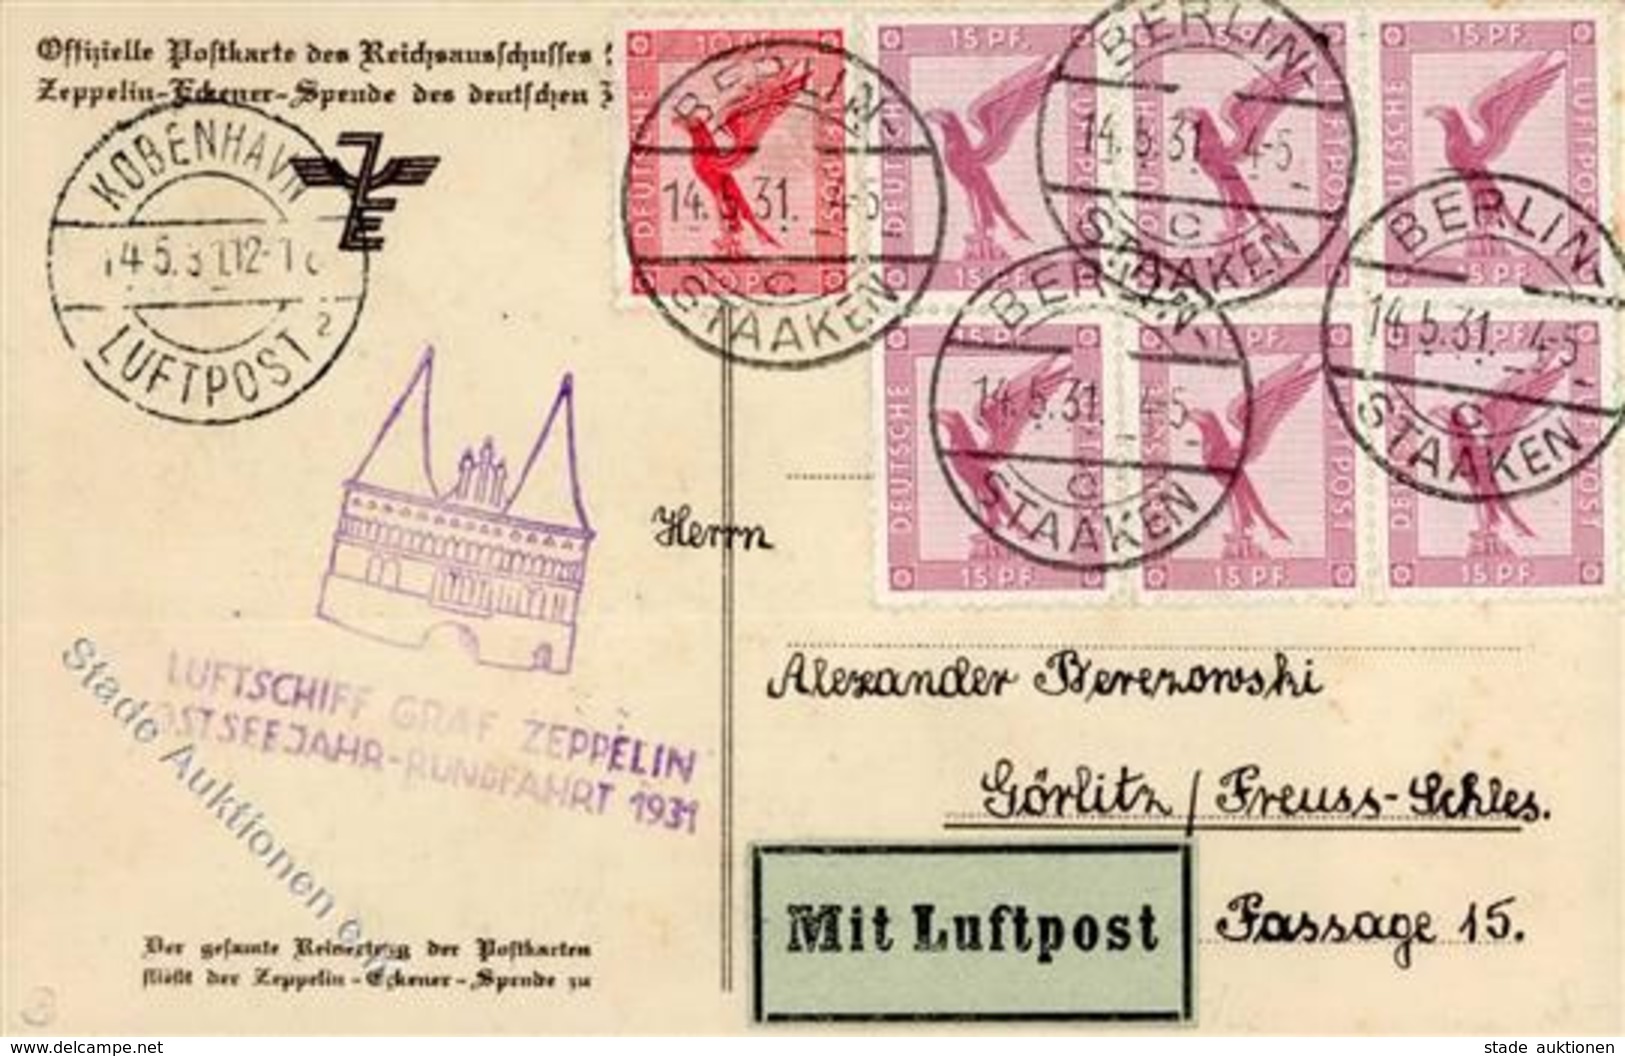 Zeppelinpost, Ostseerundfahrt 1931, Si.108Cc, 7 Adlermarken (1 M), Braune Zeppelin-Portraitkarte, DB BERLIN STAAKEN 14.5 - Zeppeline